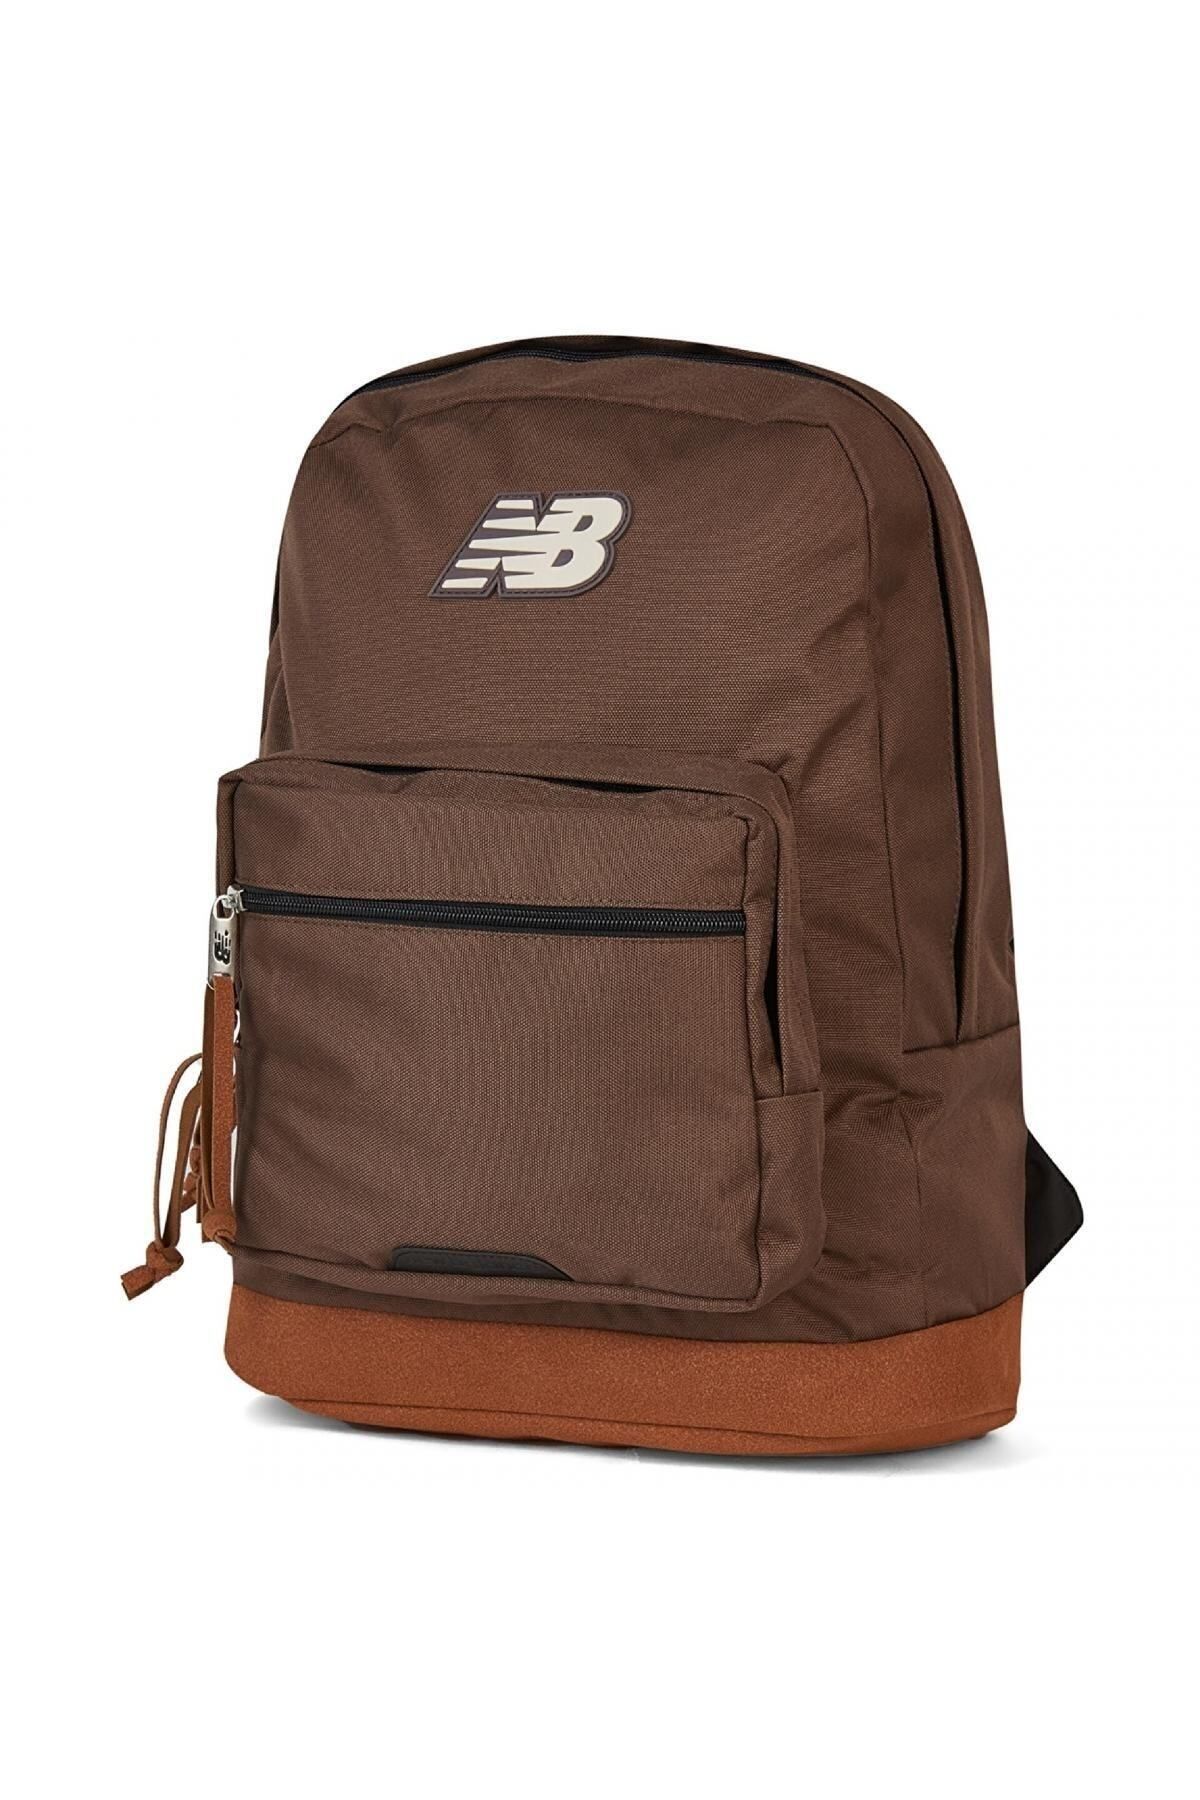 New Balance Anb3202 Nb Backpack Kahverengi Erkek Çanta